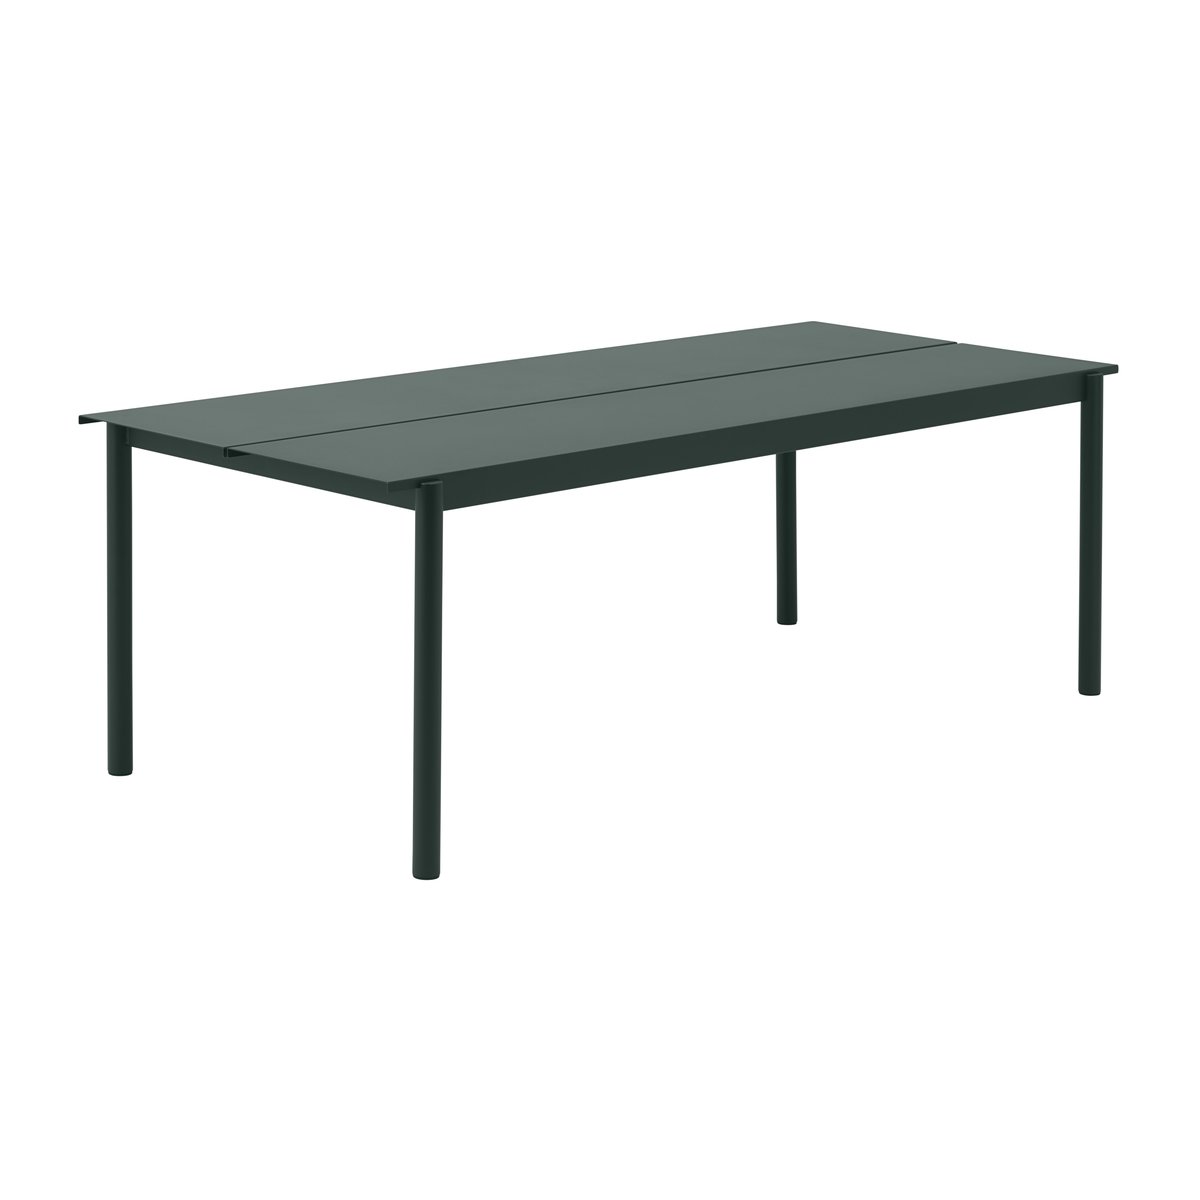 Muuto Linear steel table pöytä 220 x 90 cm Dark green (RAL 6012)